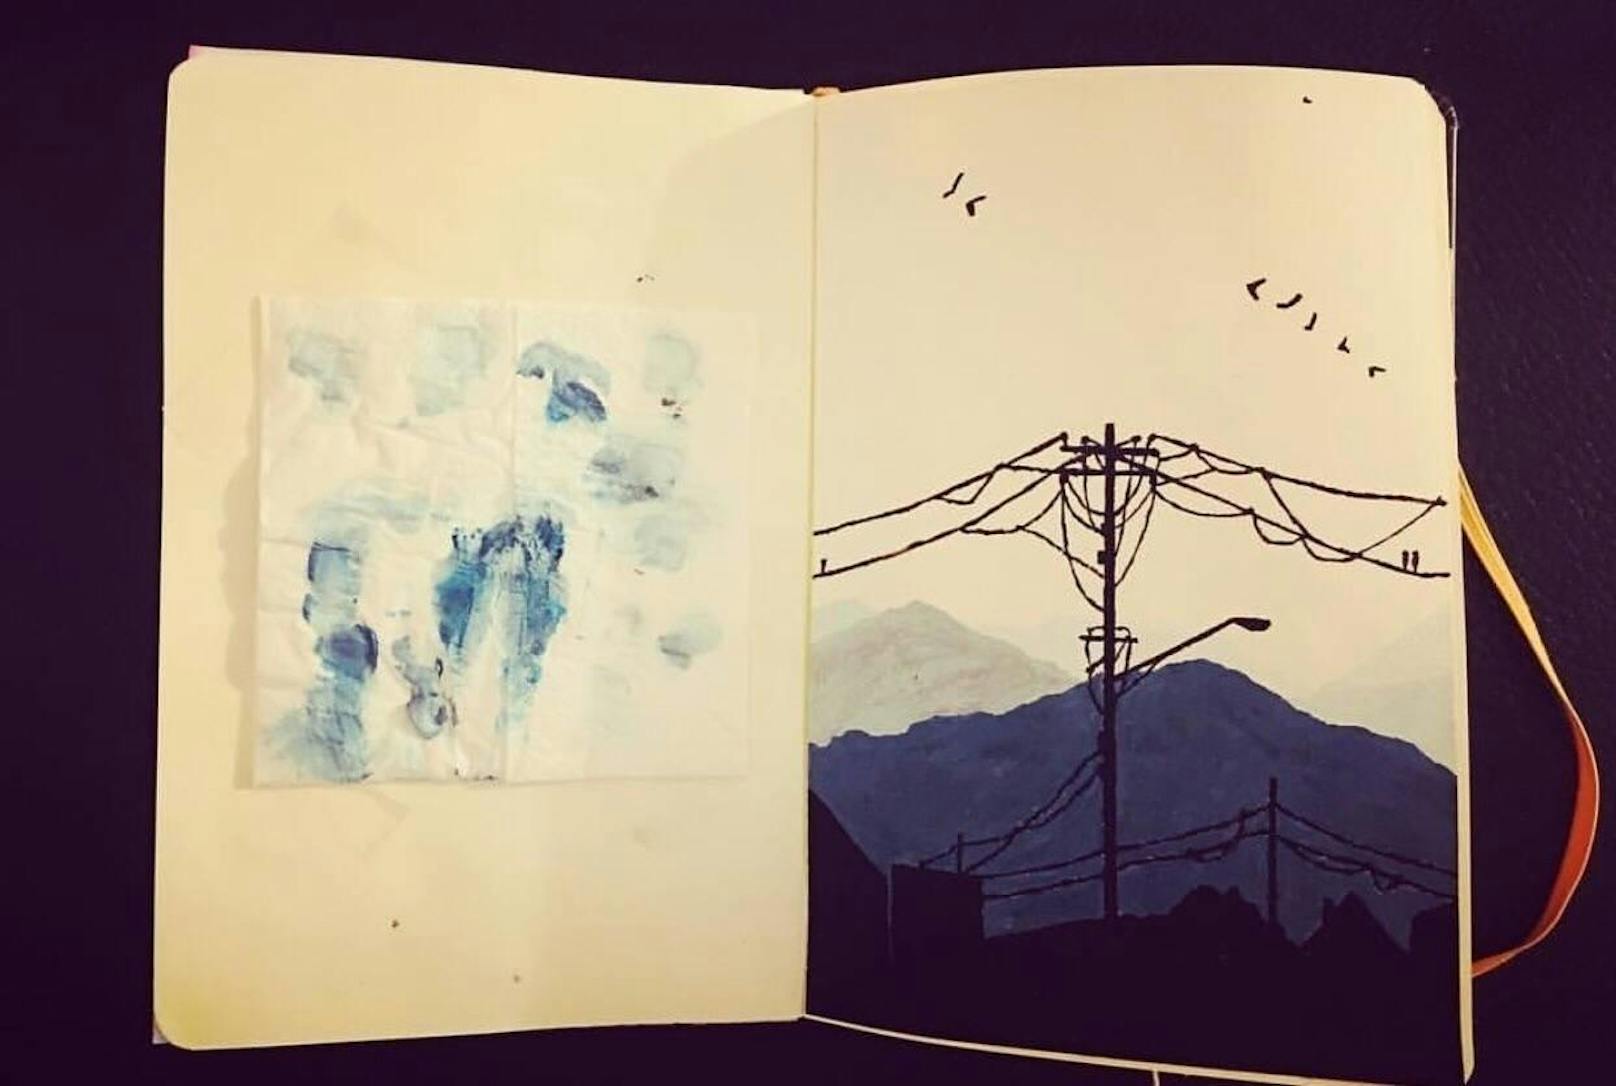 "Art-Journal" by Melanie D.